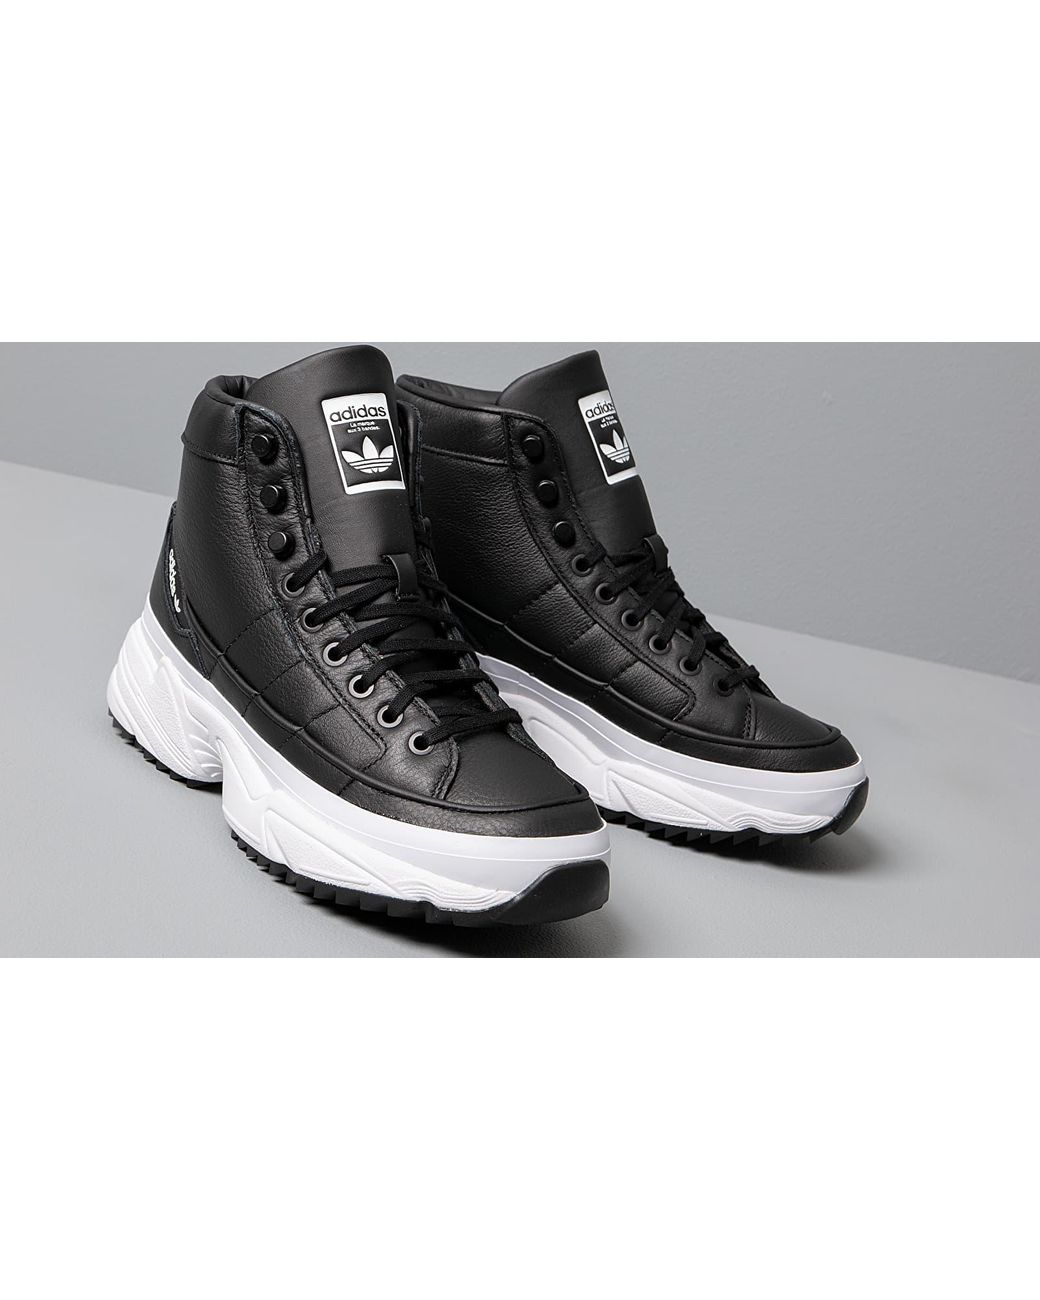 adidas Originals Adidas Kiellor Xtra W Core Black/ Core Black/ Ftw White -  Lyst